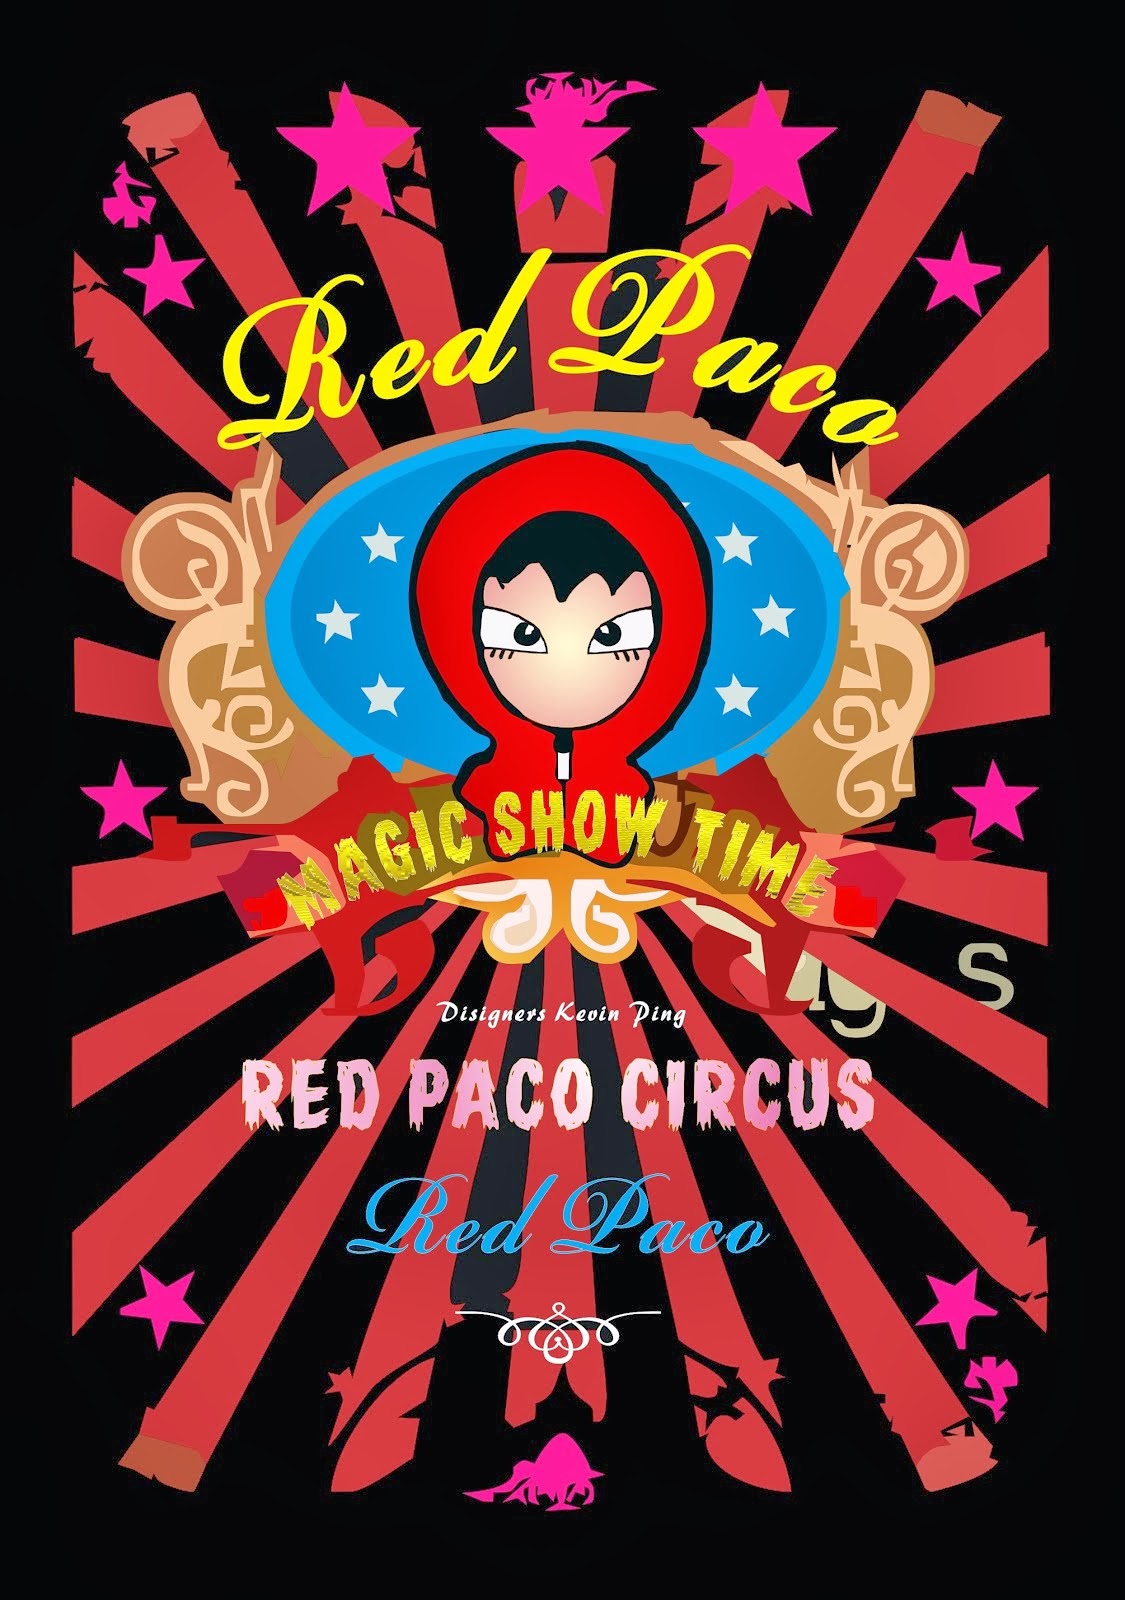 Red Paco Designer Kevin Ping